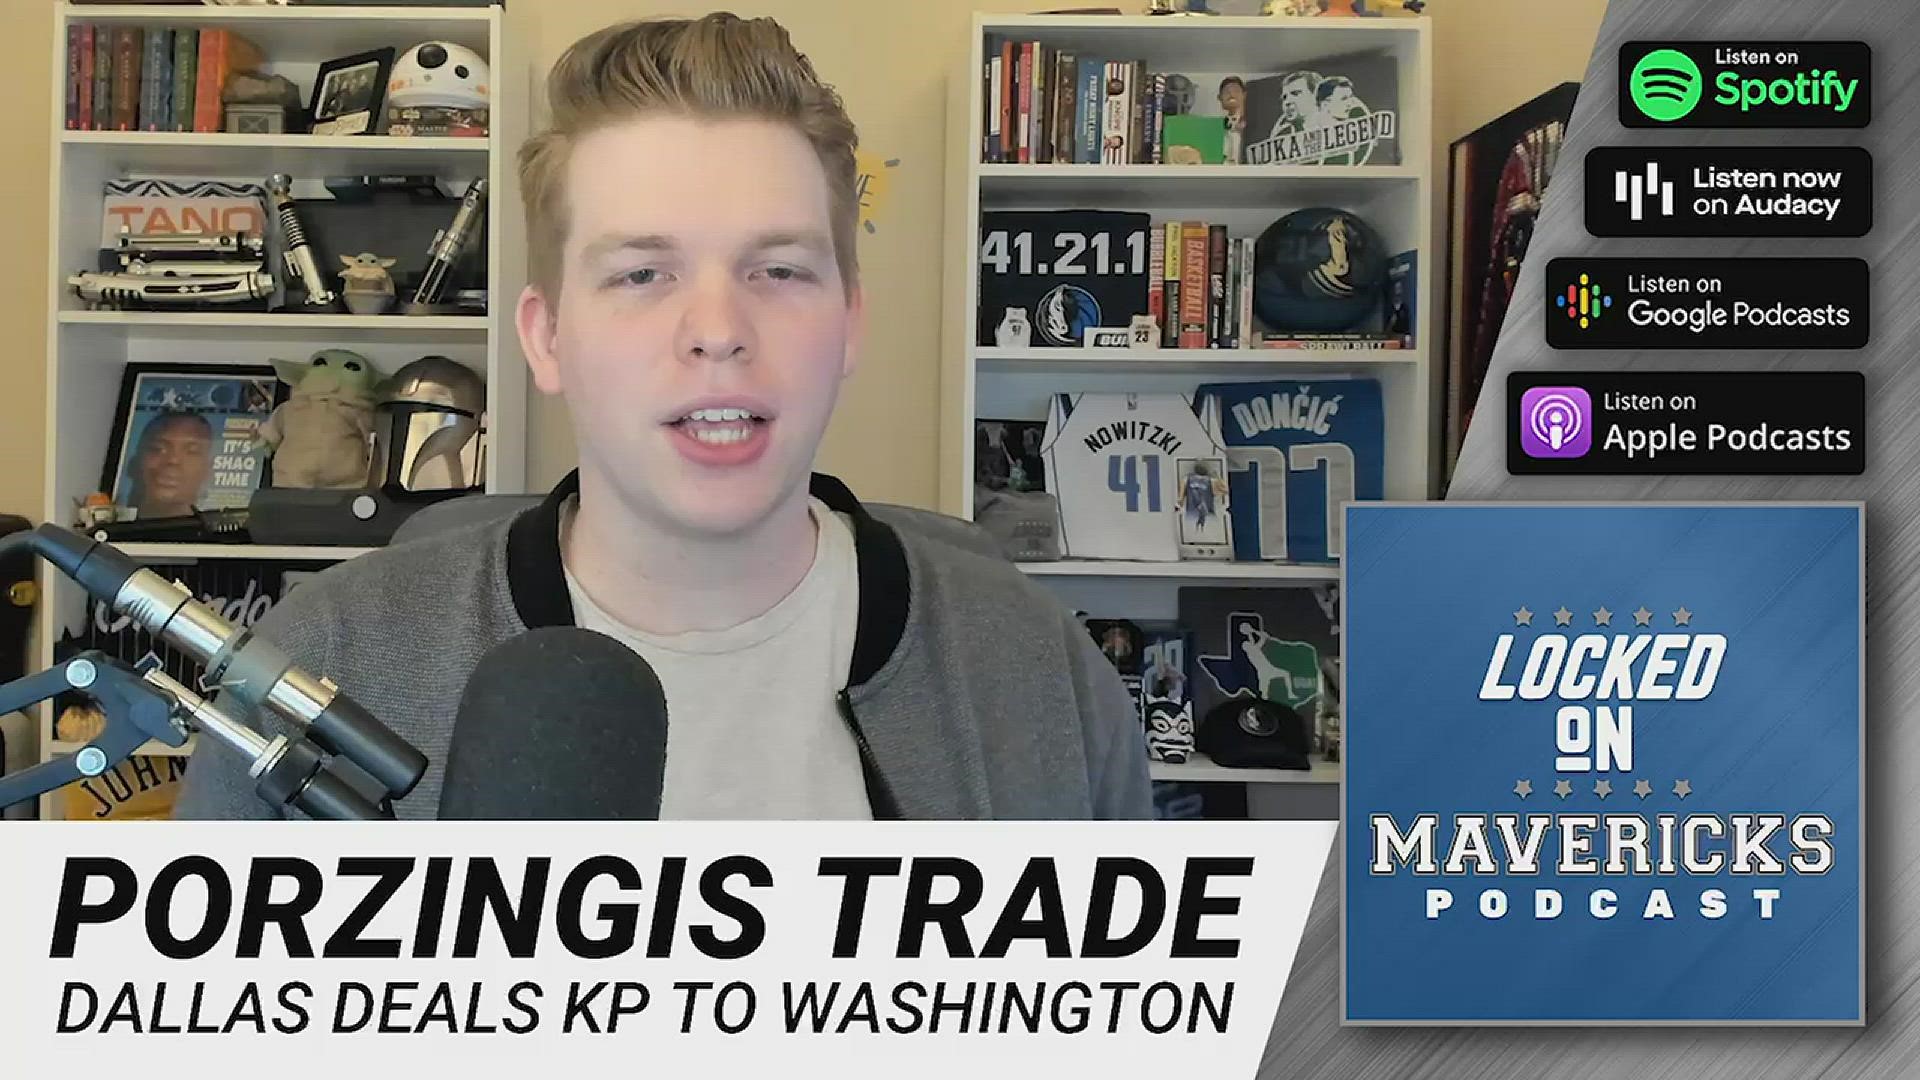 Washington Wizards Have Acquired Kristaps Porzingis For Spencer